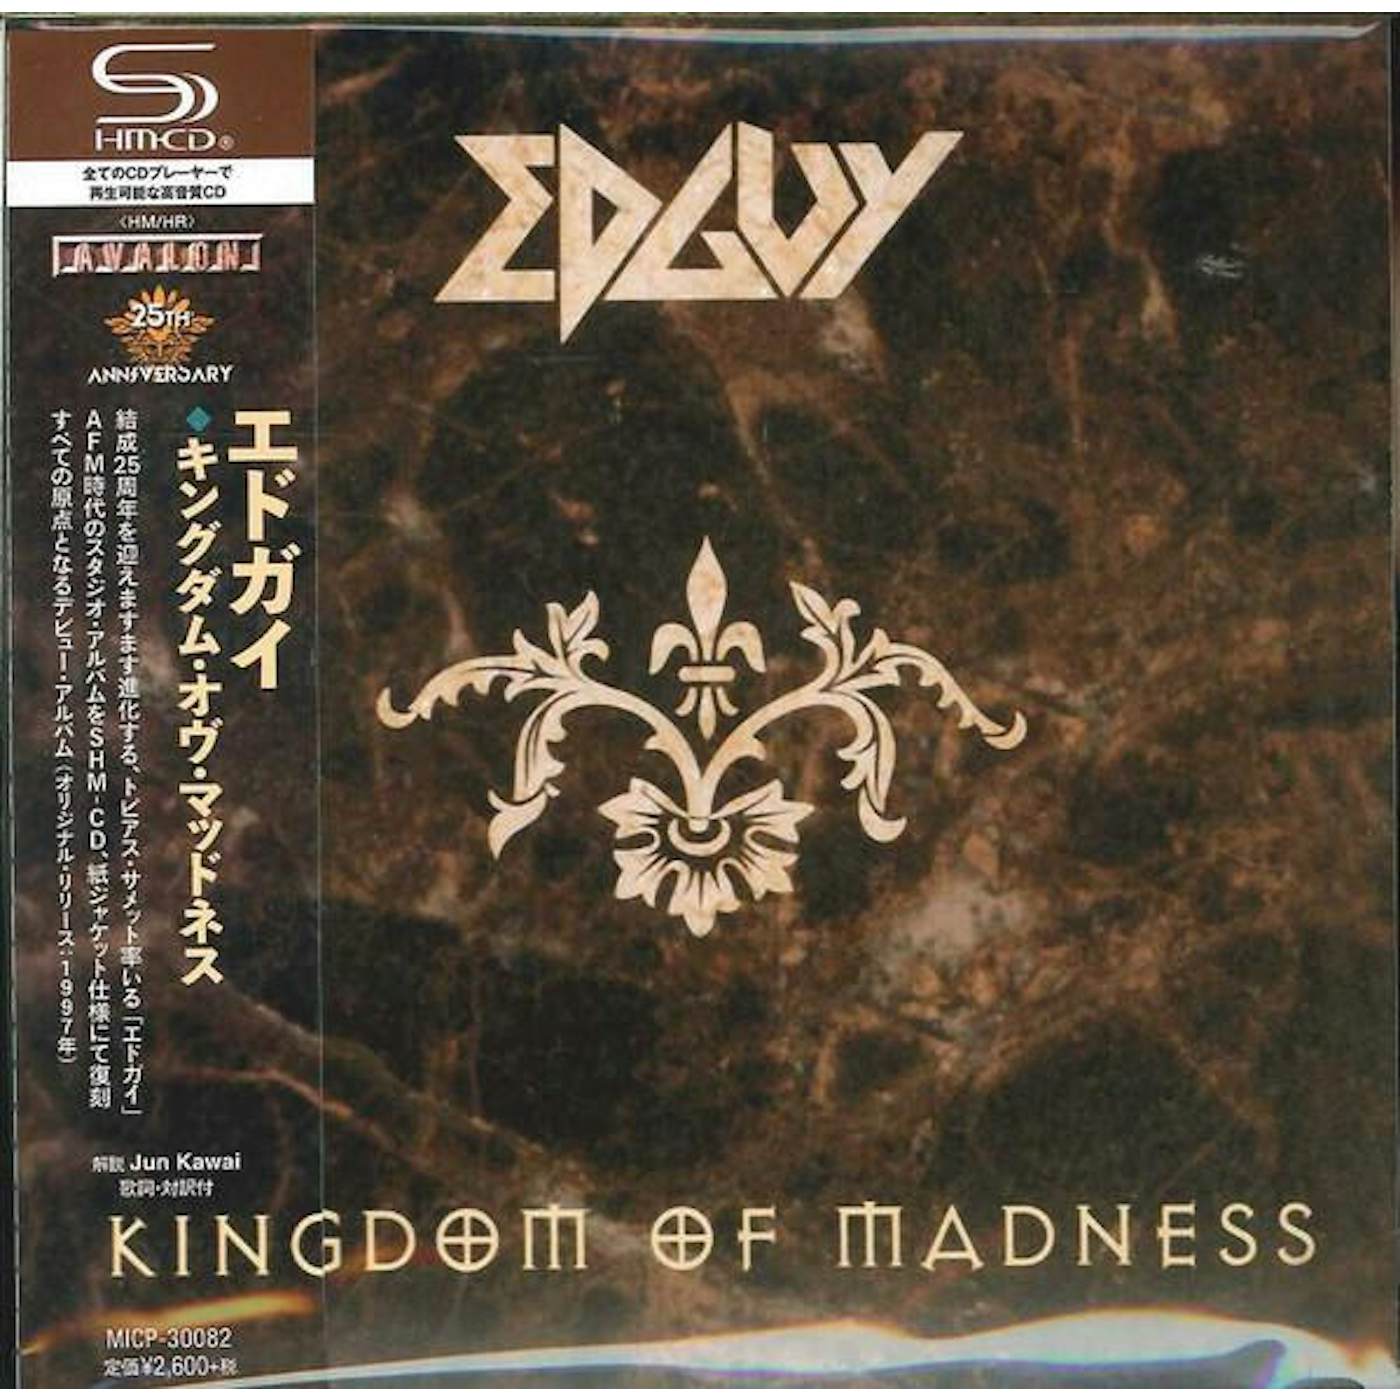 Edguy KINGDOM OF MADNESS (SHM/MINI LP JACKET) CD